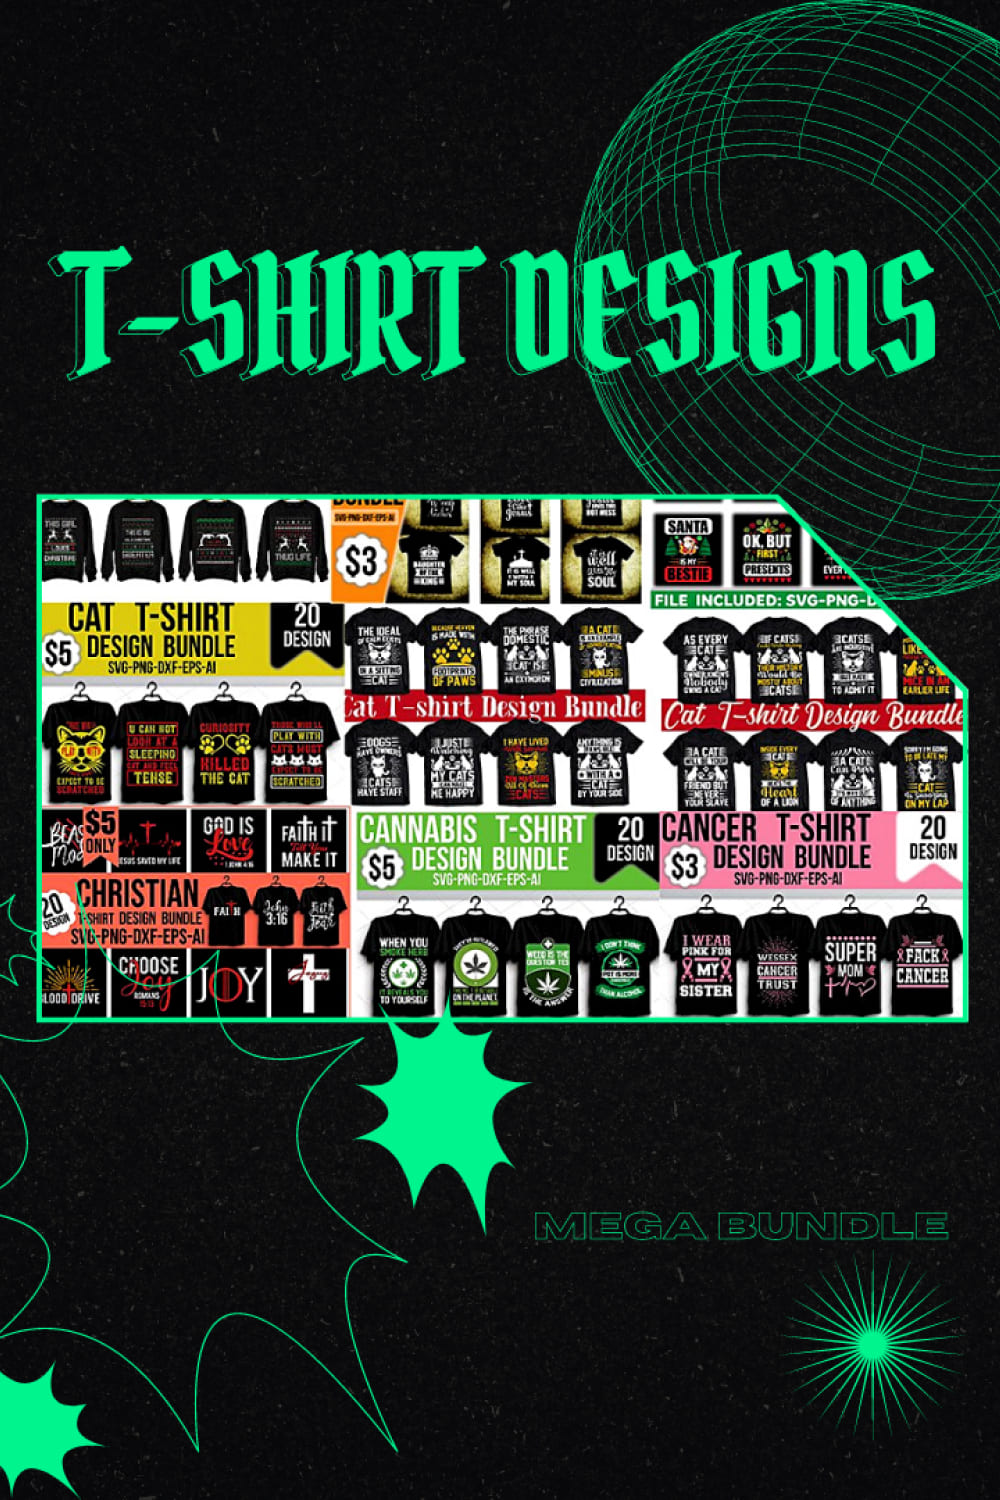 T-Shirt Designs Mega Bundle - Pinterest.